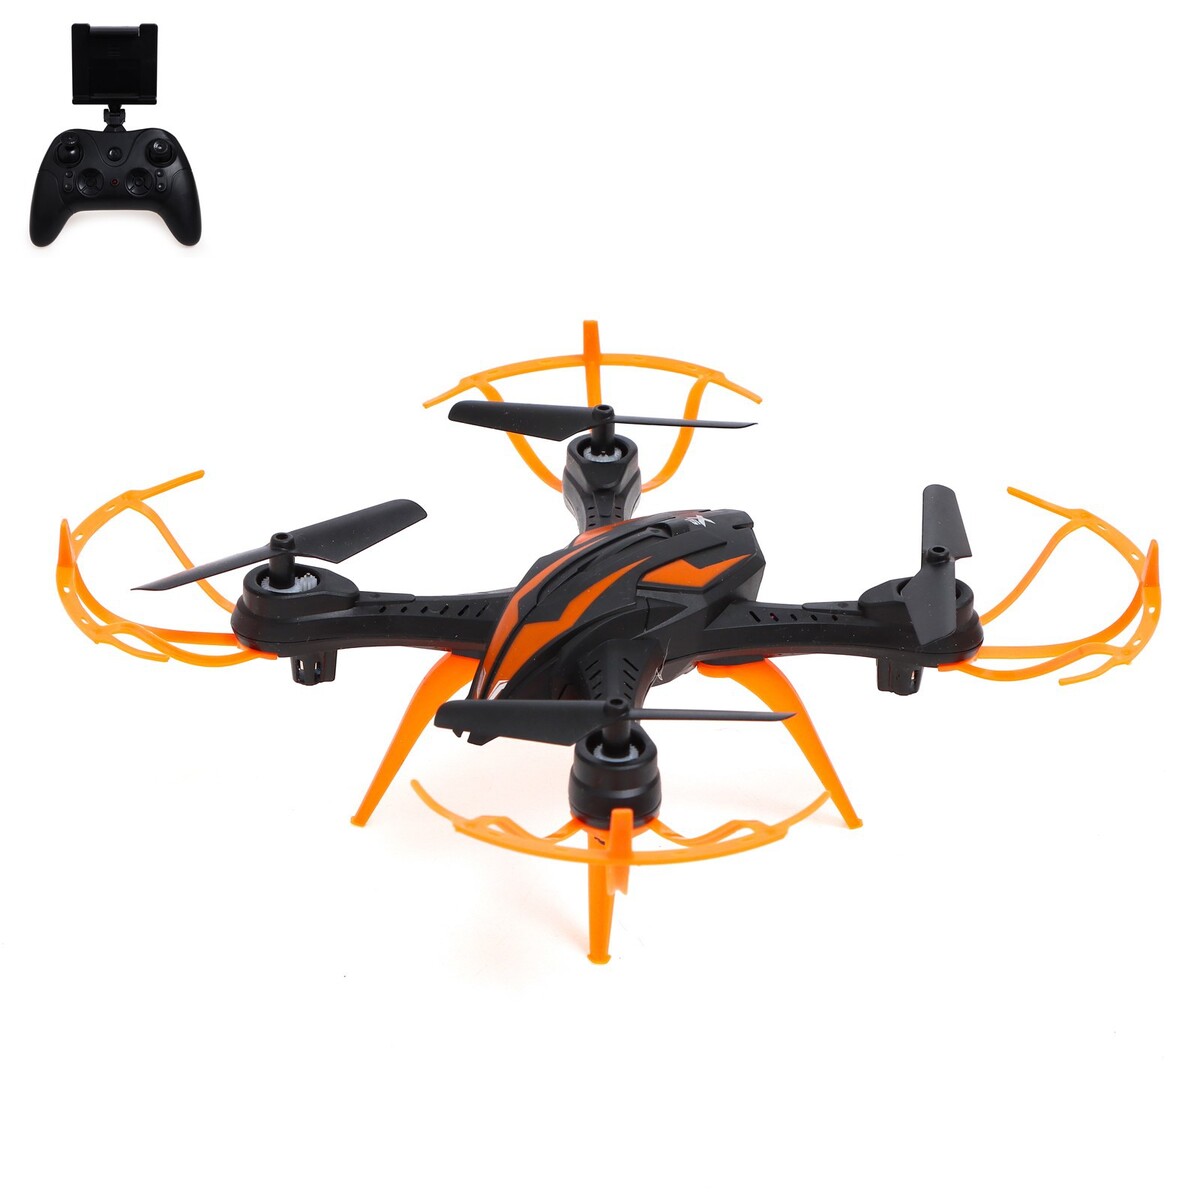 Квадрокоптер lh-x15wf, камера, передача изображения на смартфон, wi-fi, цвет черно-оранжевый квадрокоптер mjx b19 4k 5g gps mjx b19 4k базовый